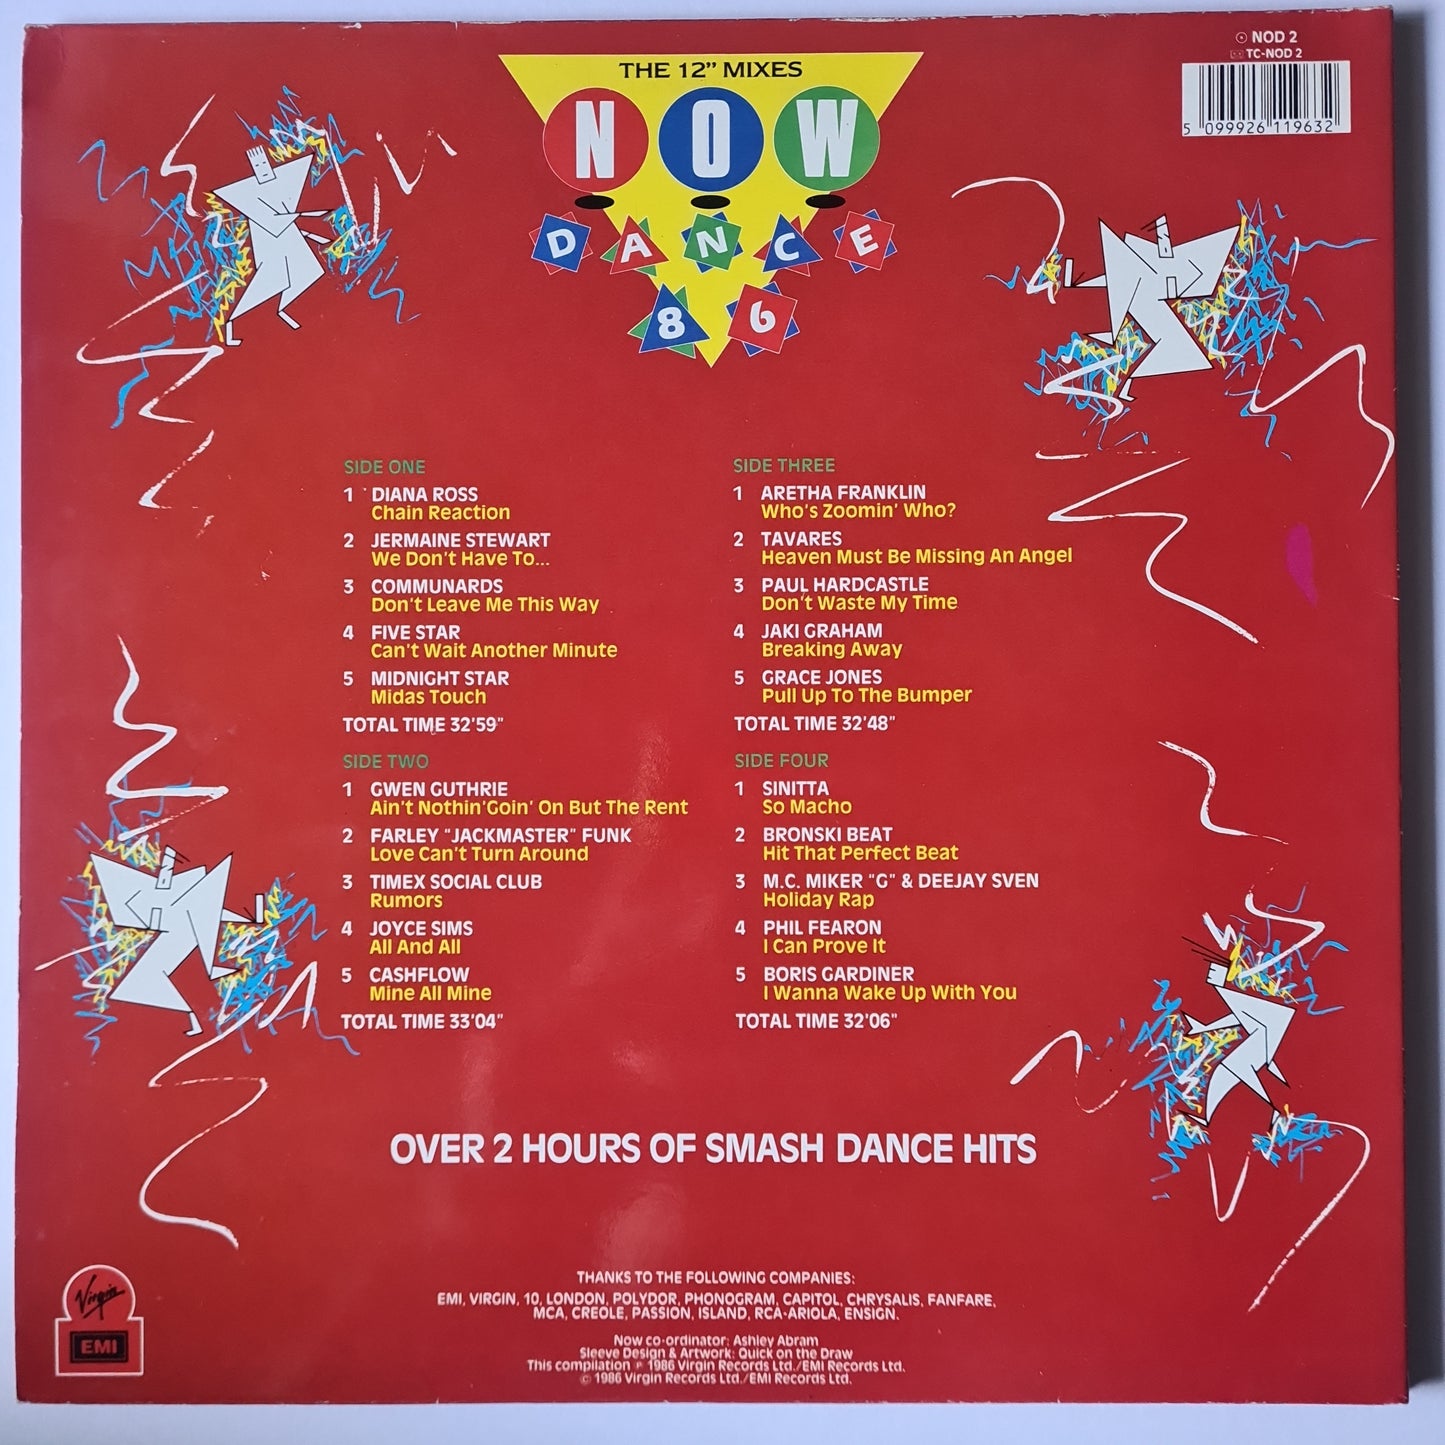 Various Artists/Hits album - Now Dance 86: The 12" Mixes - 1986 (2LP gatefold) - Vinyl Record